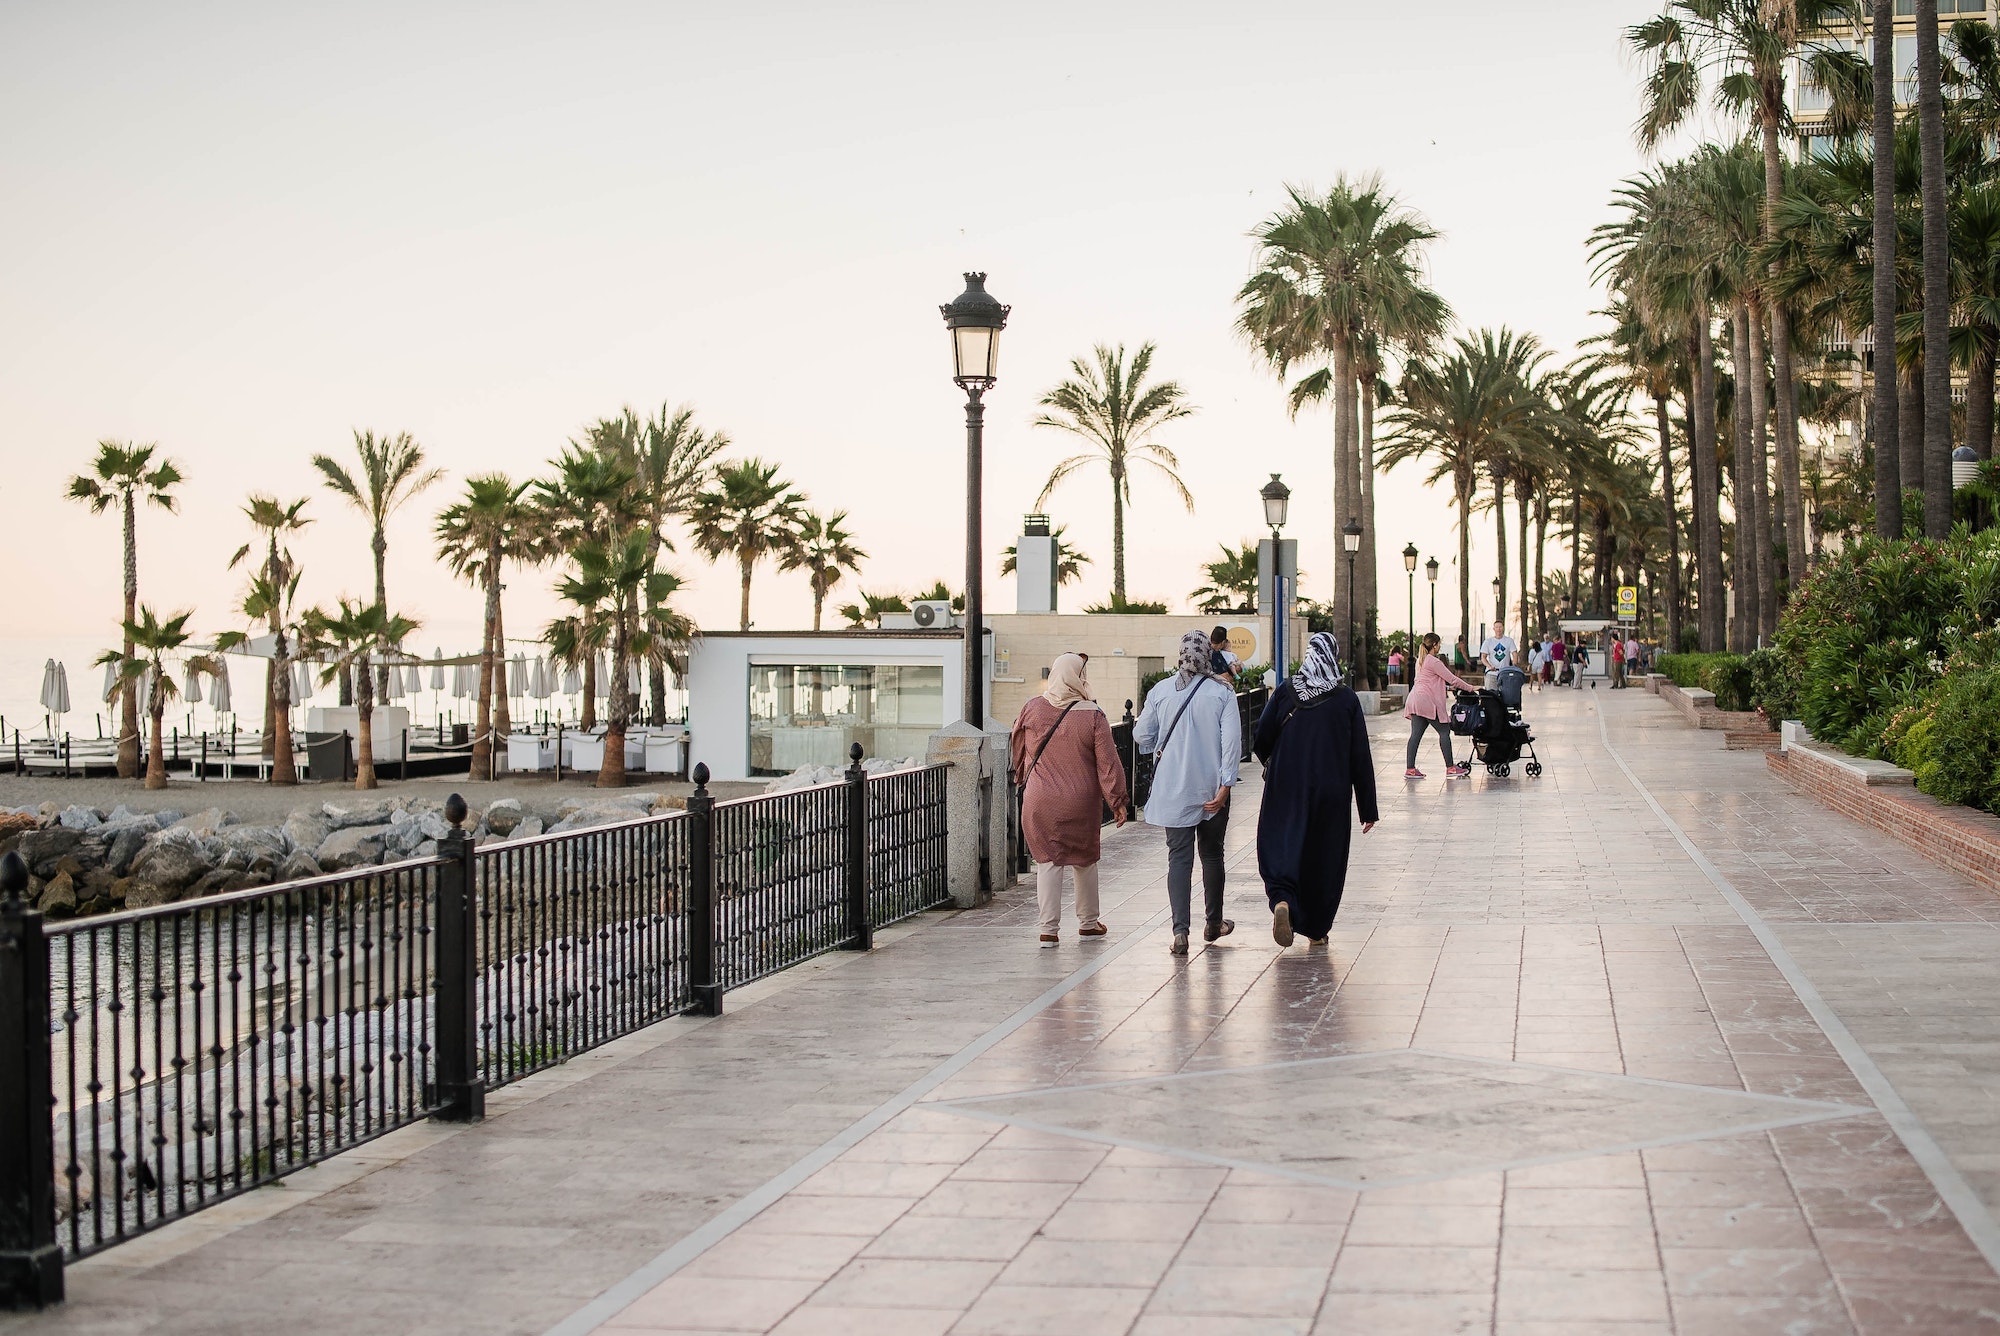 Spain . Marbella. People walk on the beach